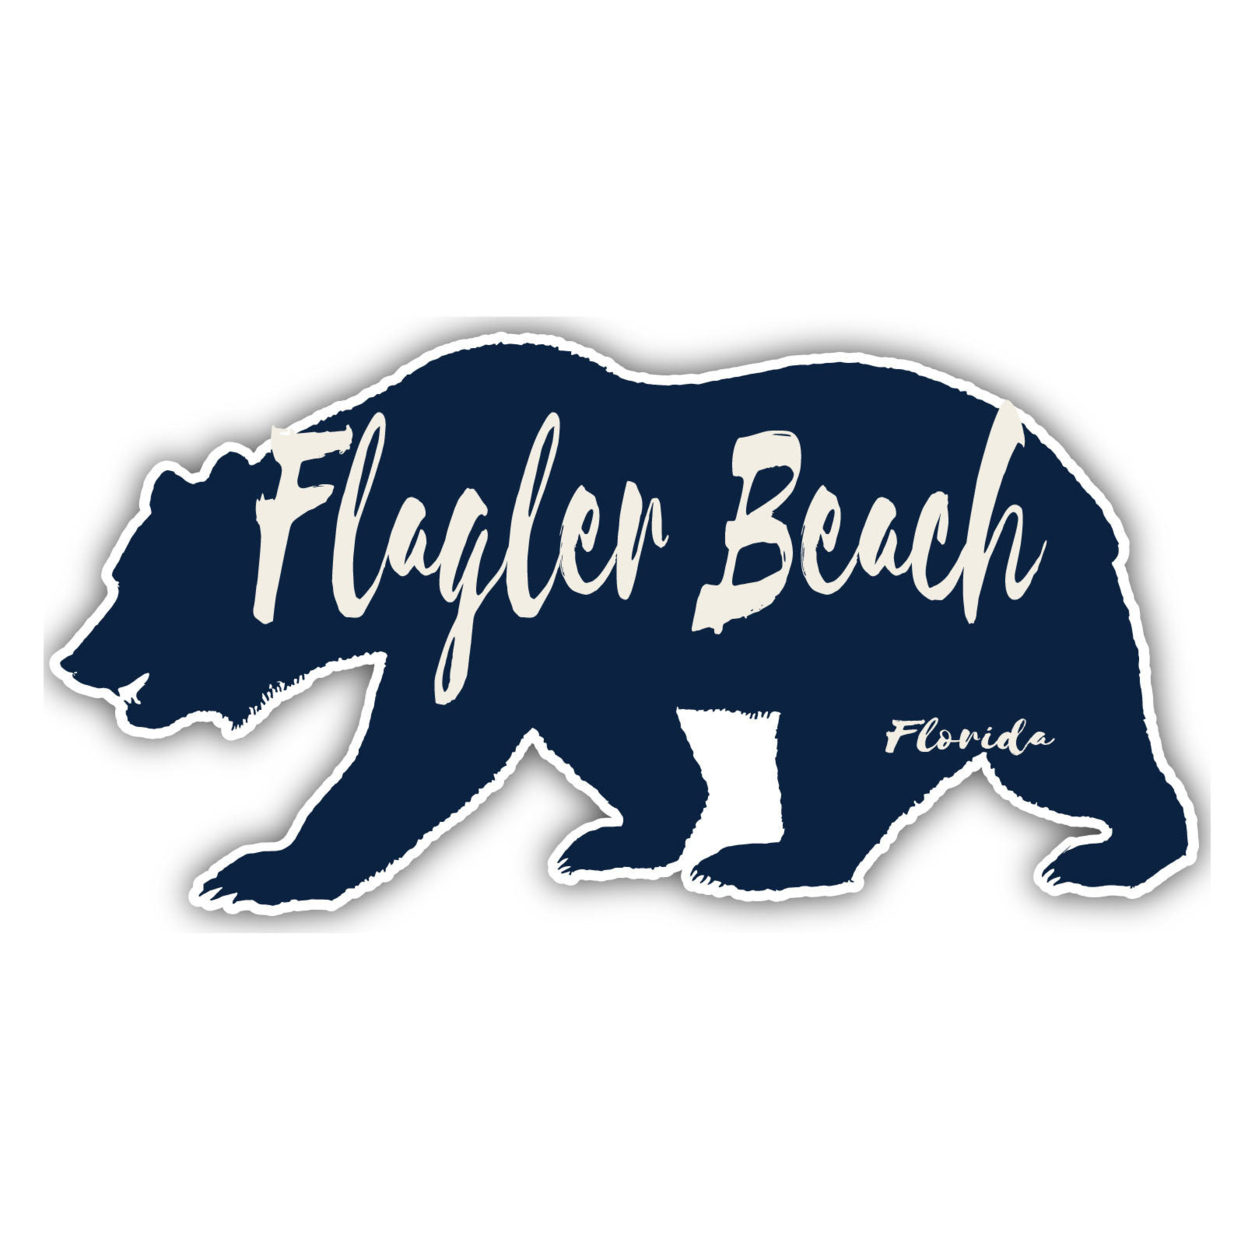 Flagler Beach Florida Souvenir Decorative Stickers (Choose Theme And Size) - 4-Pack, 4-Inch, Bear